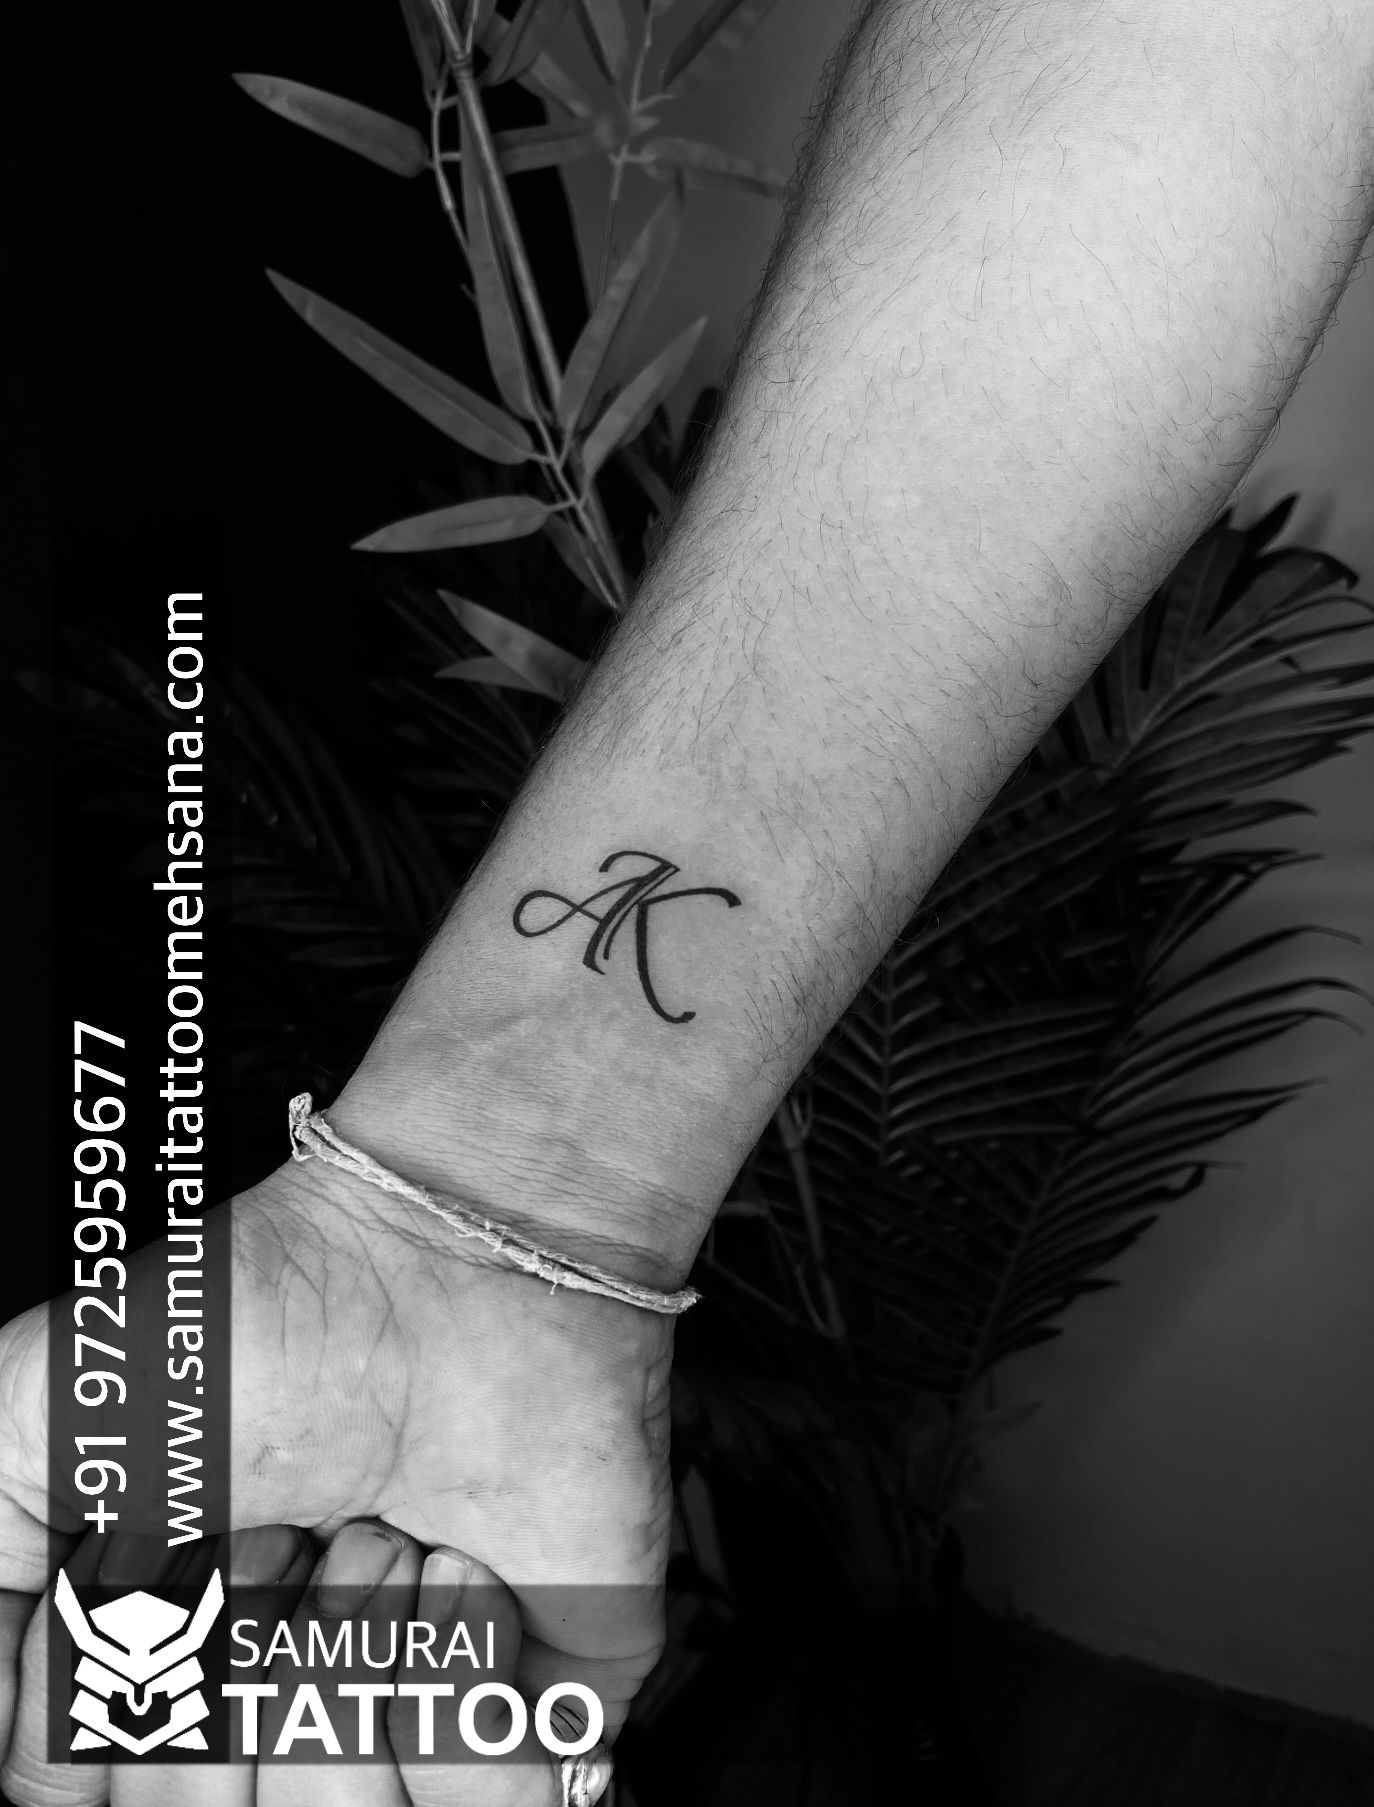 RKKing Tattoos (@r_k_king_tattoos) • Instagram photos and videos